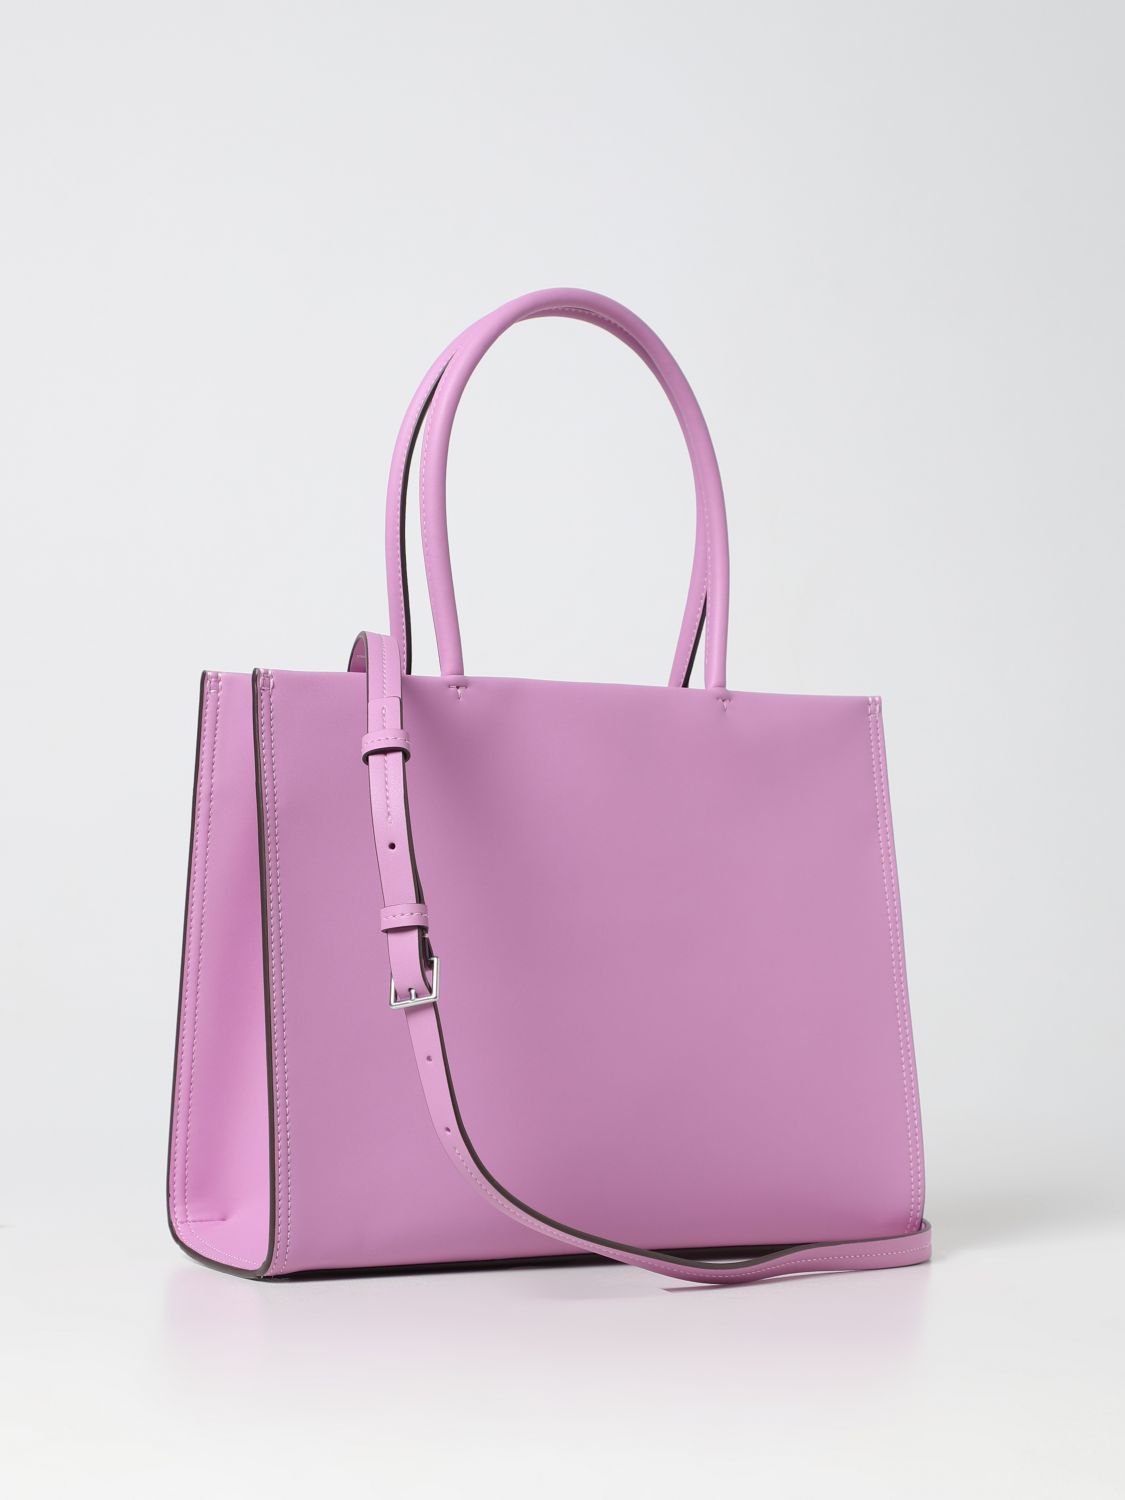 Tory Burch Bags & Handbags for Women for sale